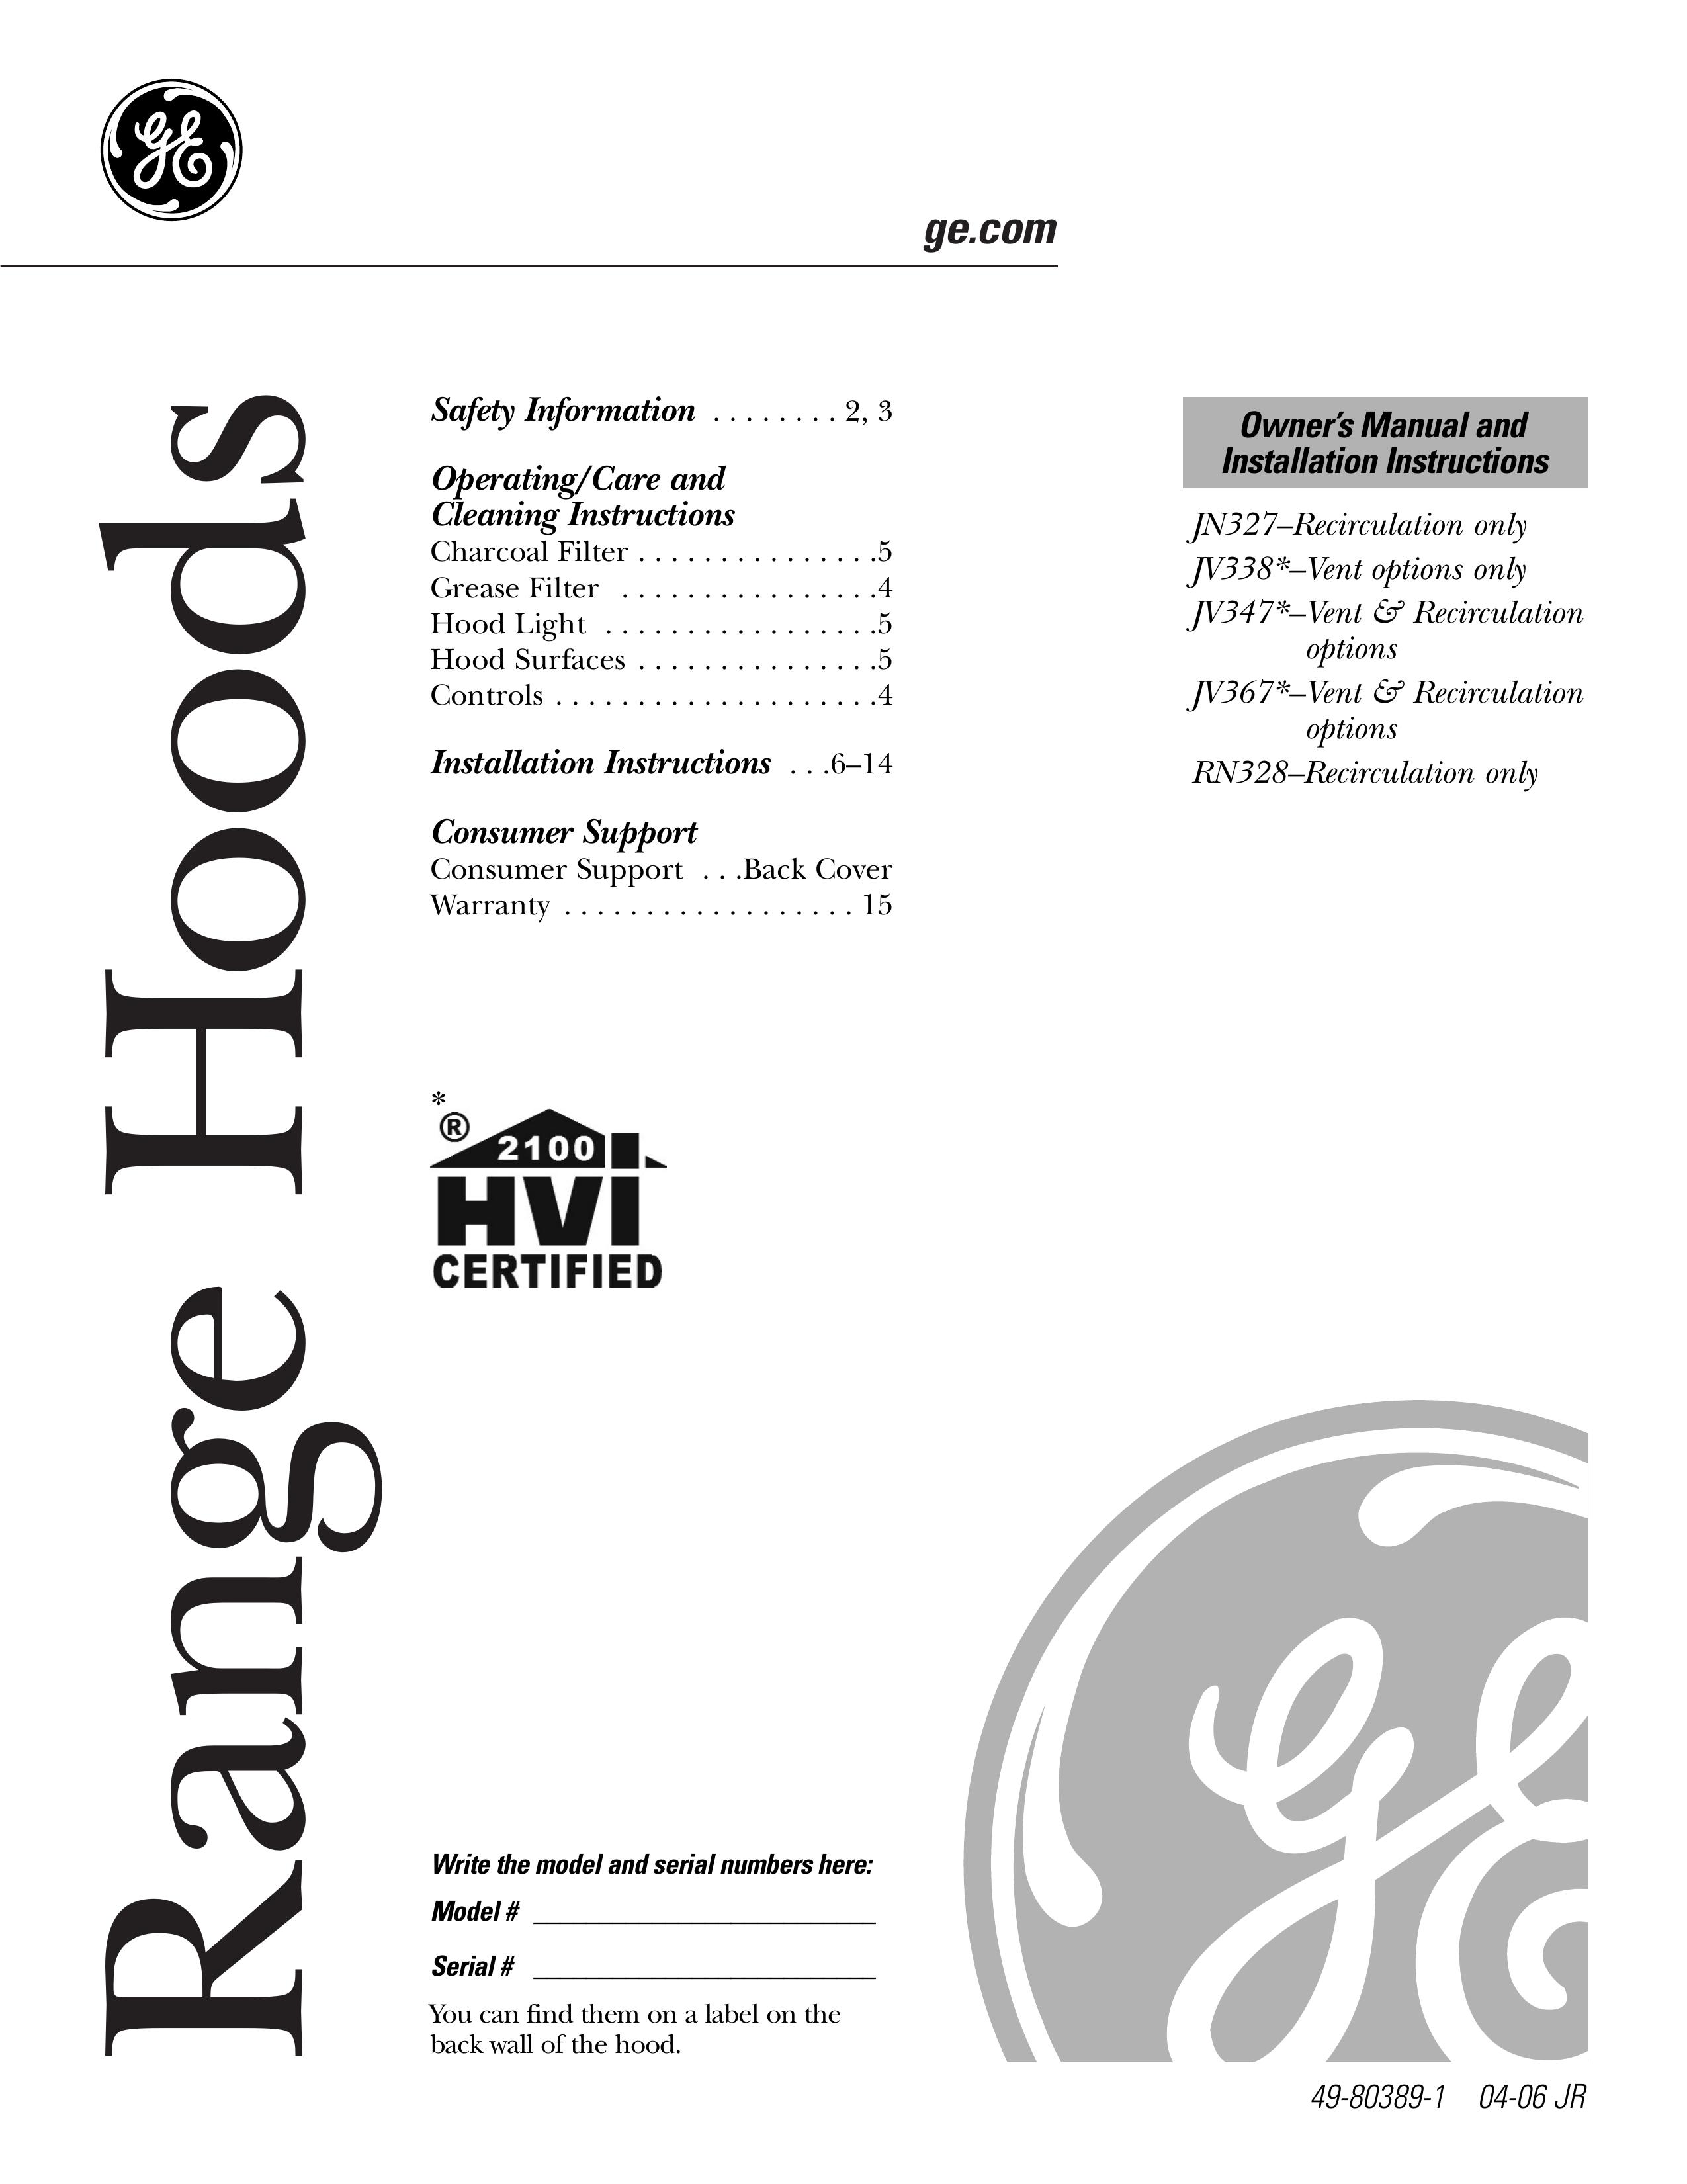 GE Monogram JV347 Ventilation Hood User Manual